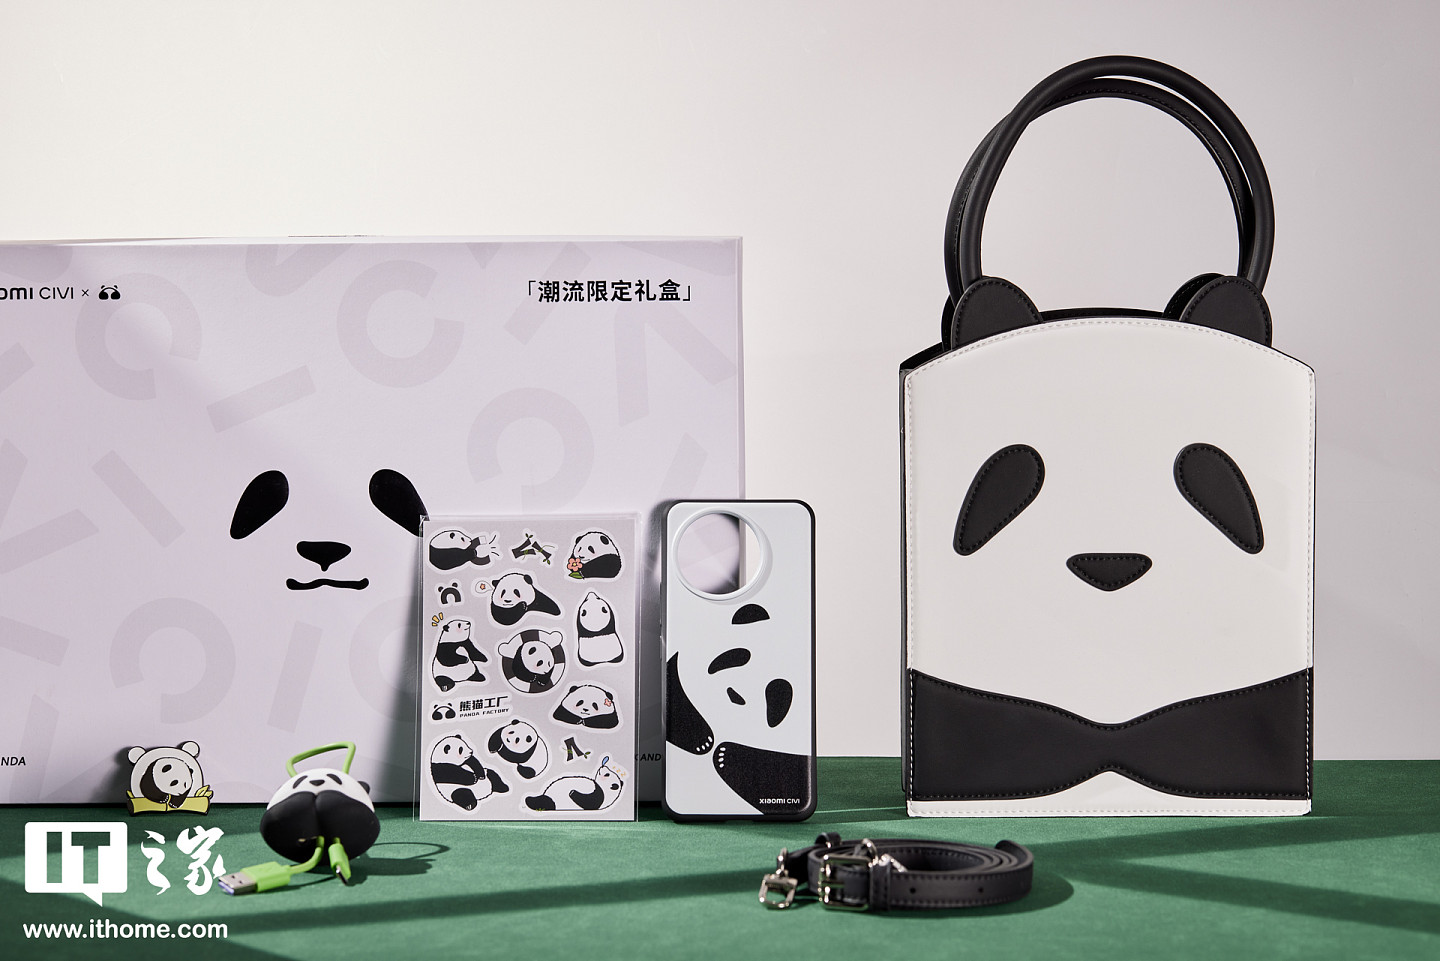 【IT之家开箱】小米 Civi 系列熊猫限定礼盒图赏：熊猫来袭，萌趣兼顾实用 - 2